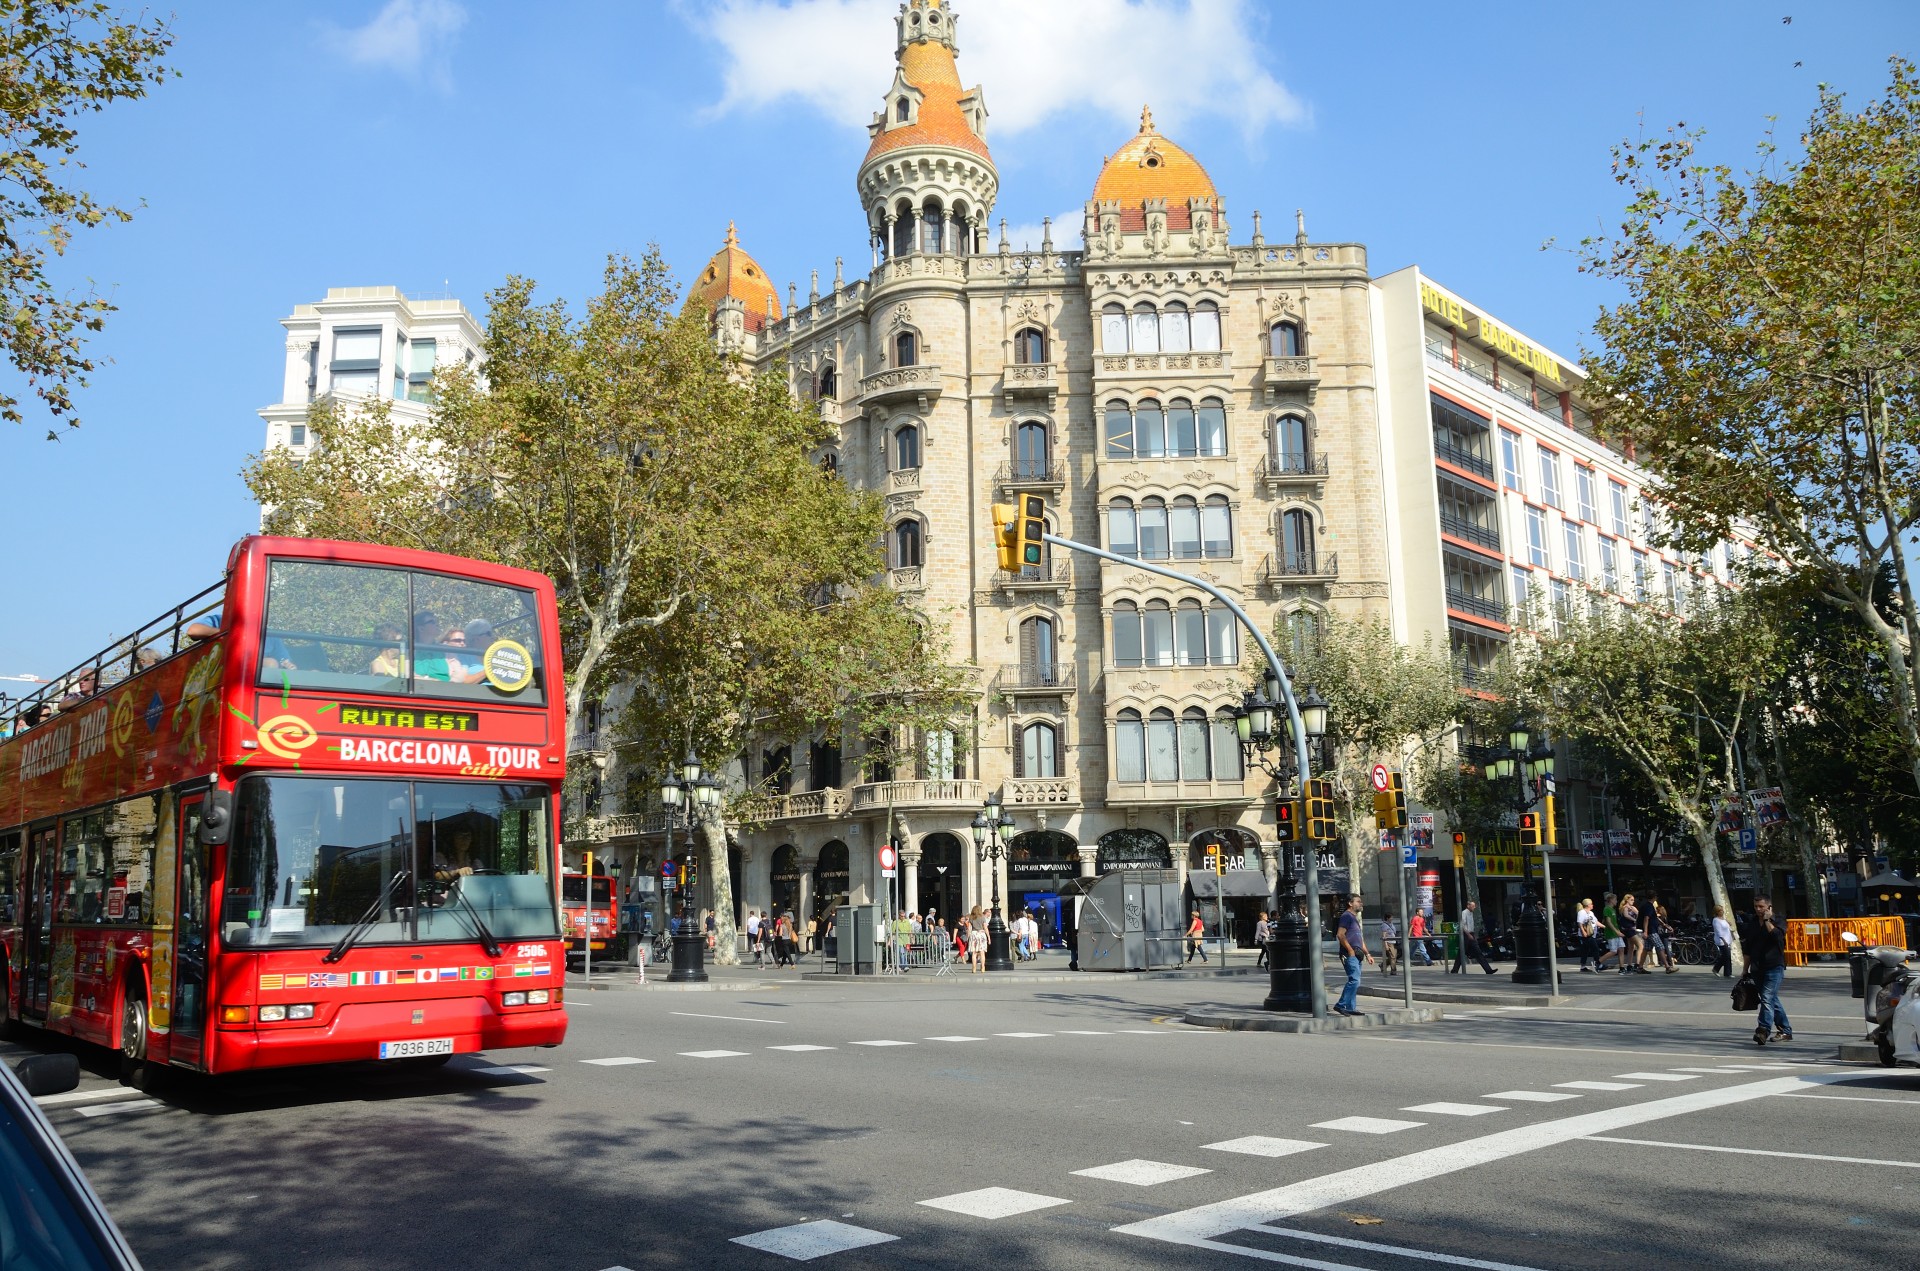 turist-bus-in-barcelona-1421690687ZZu